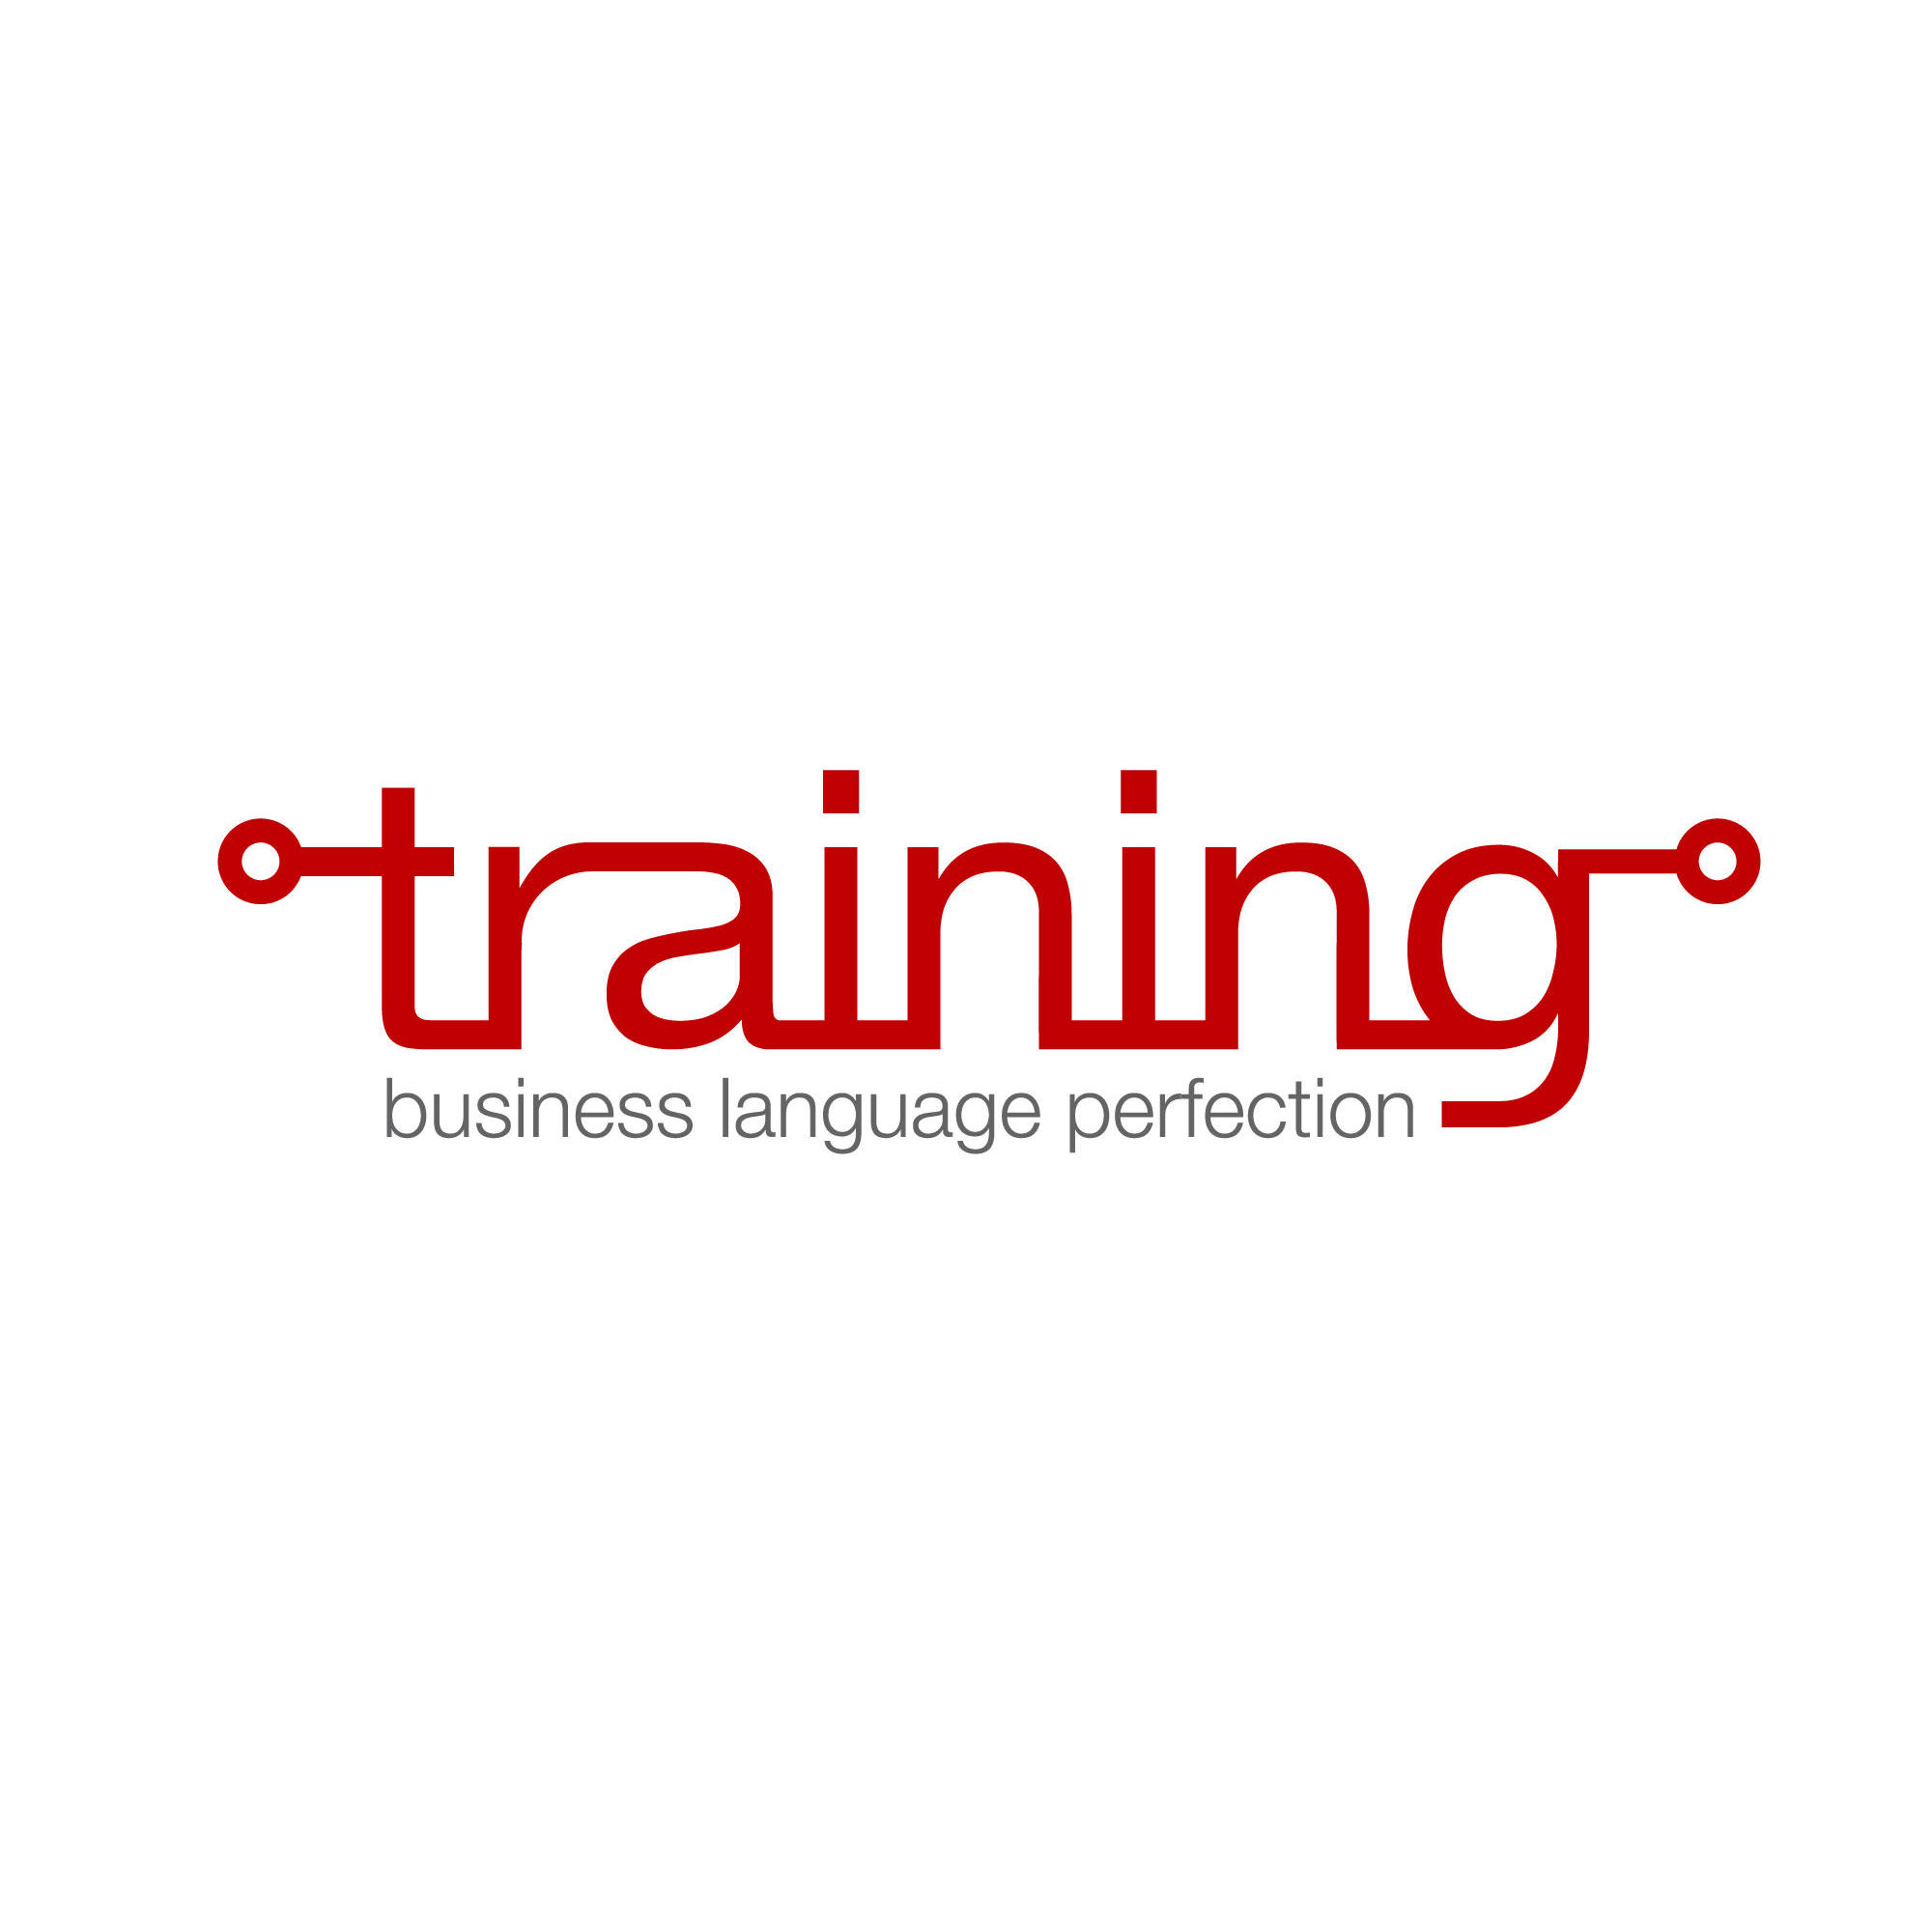 TRAINING Business Language Perfection Logo